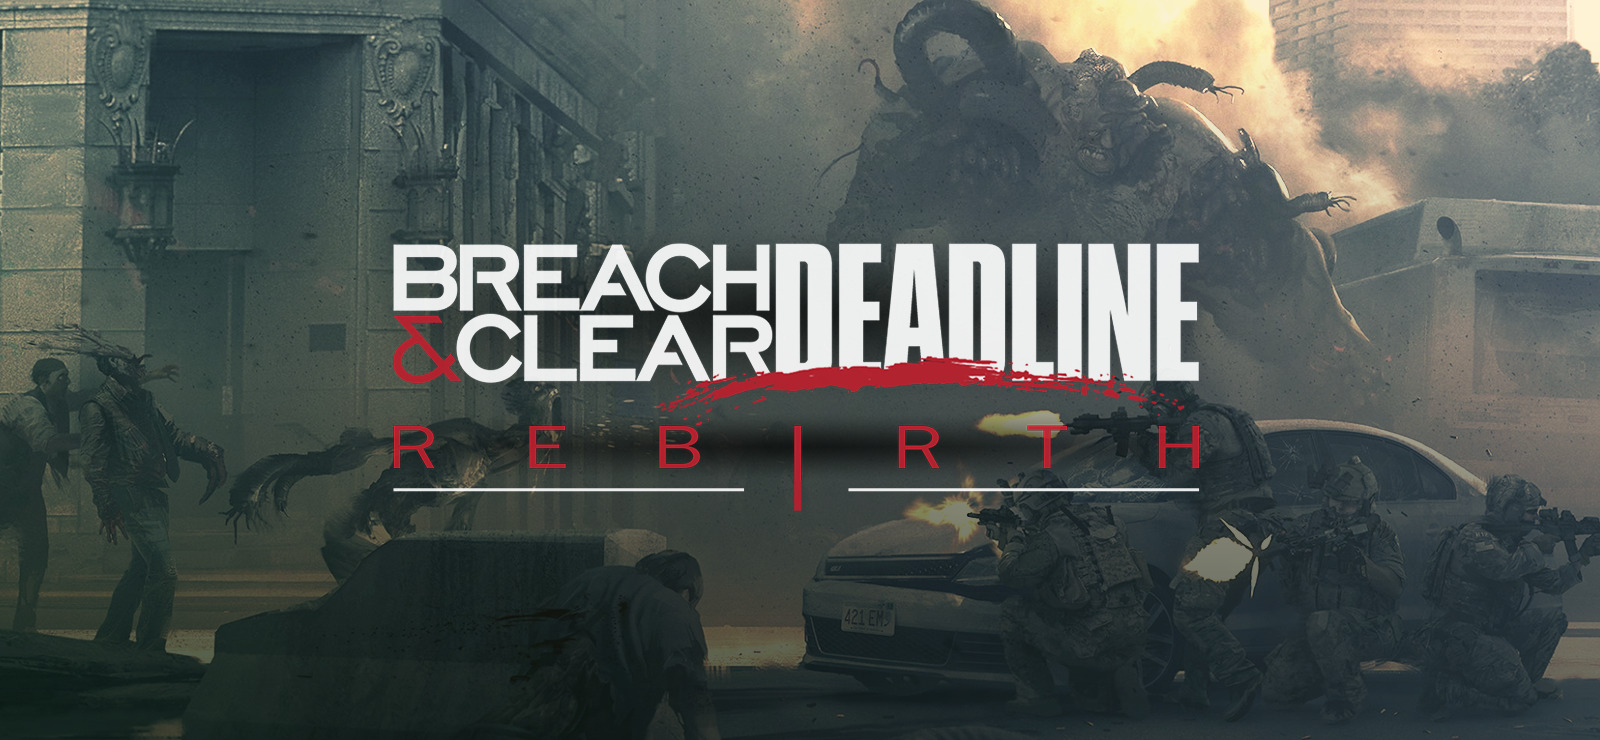 breach and clear deadline limited run games